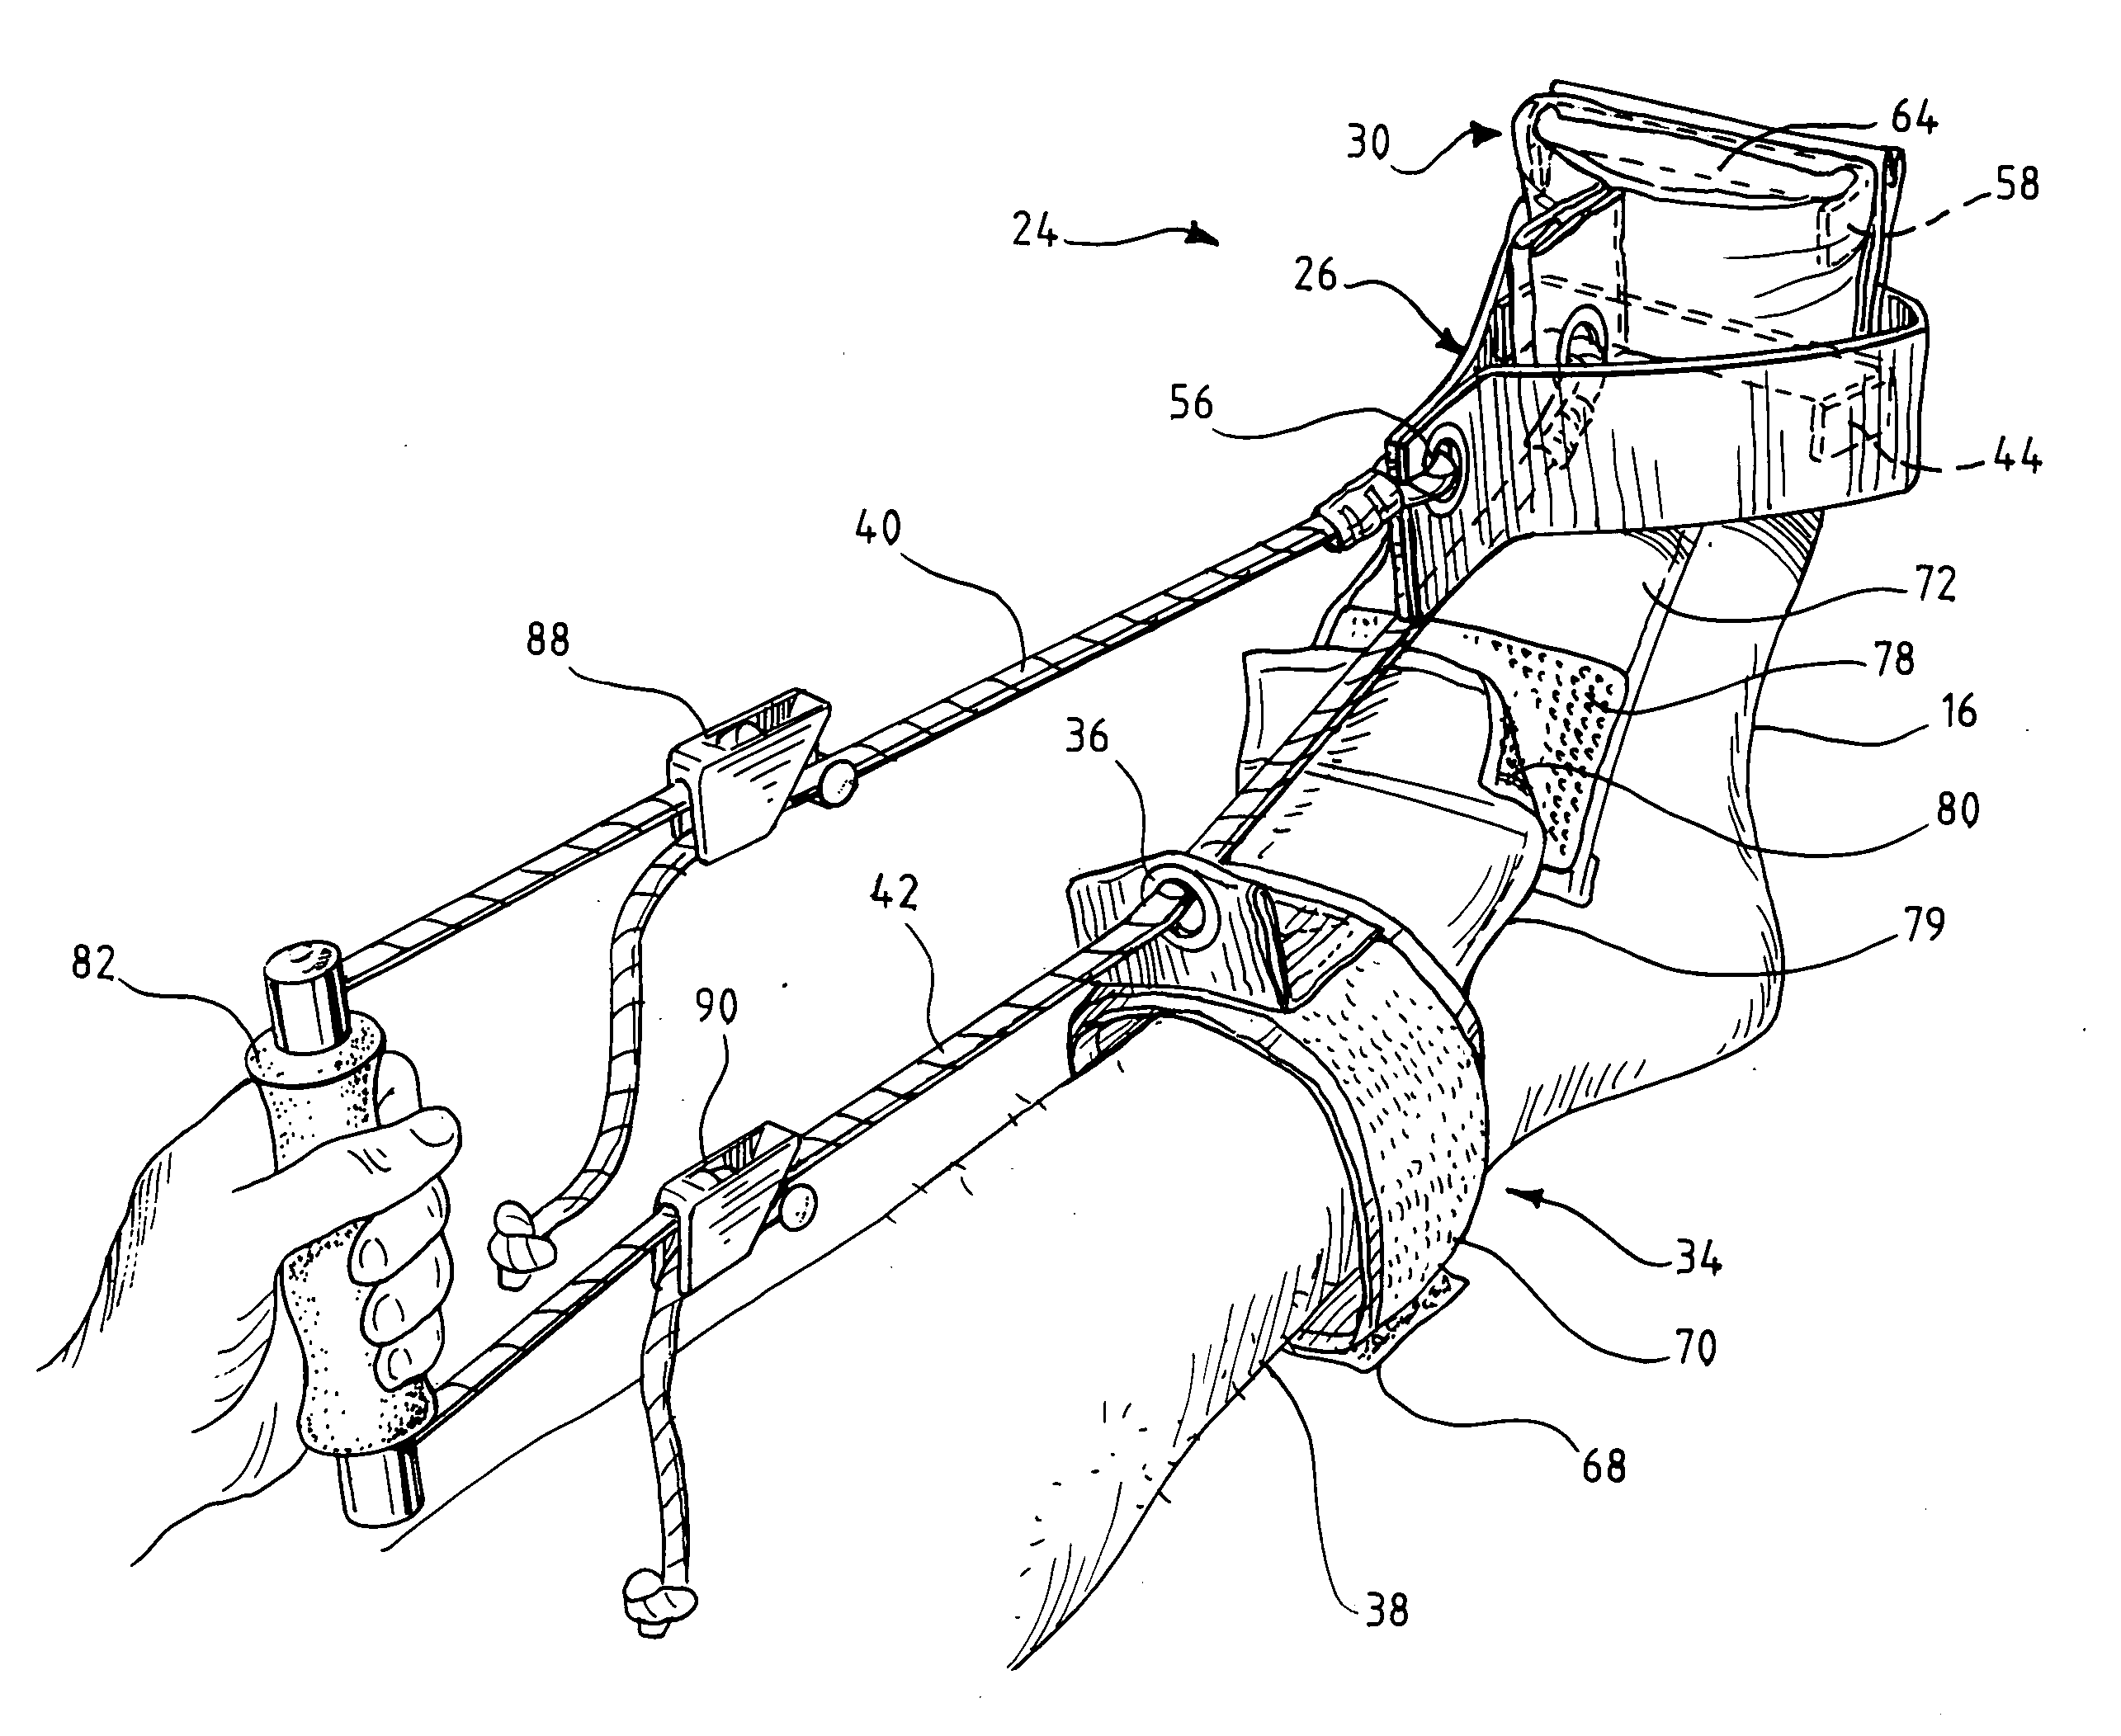 Non-weight bearing foot and leg exercising apparatus